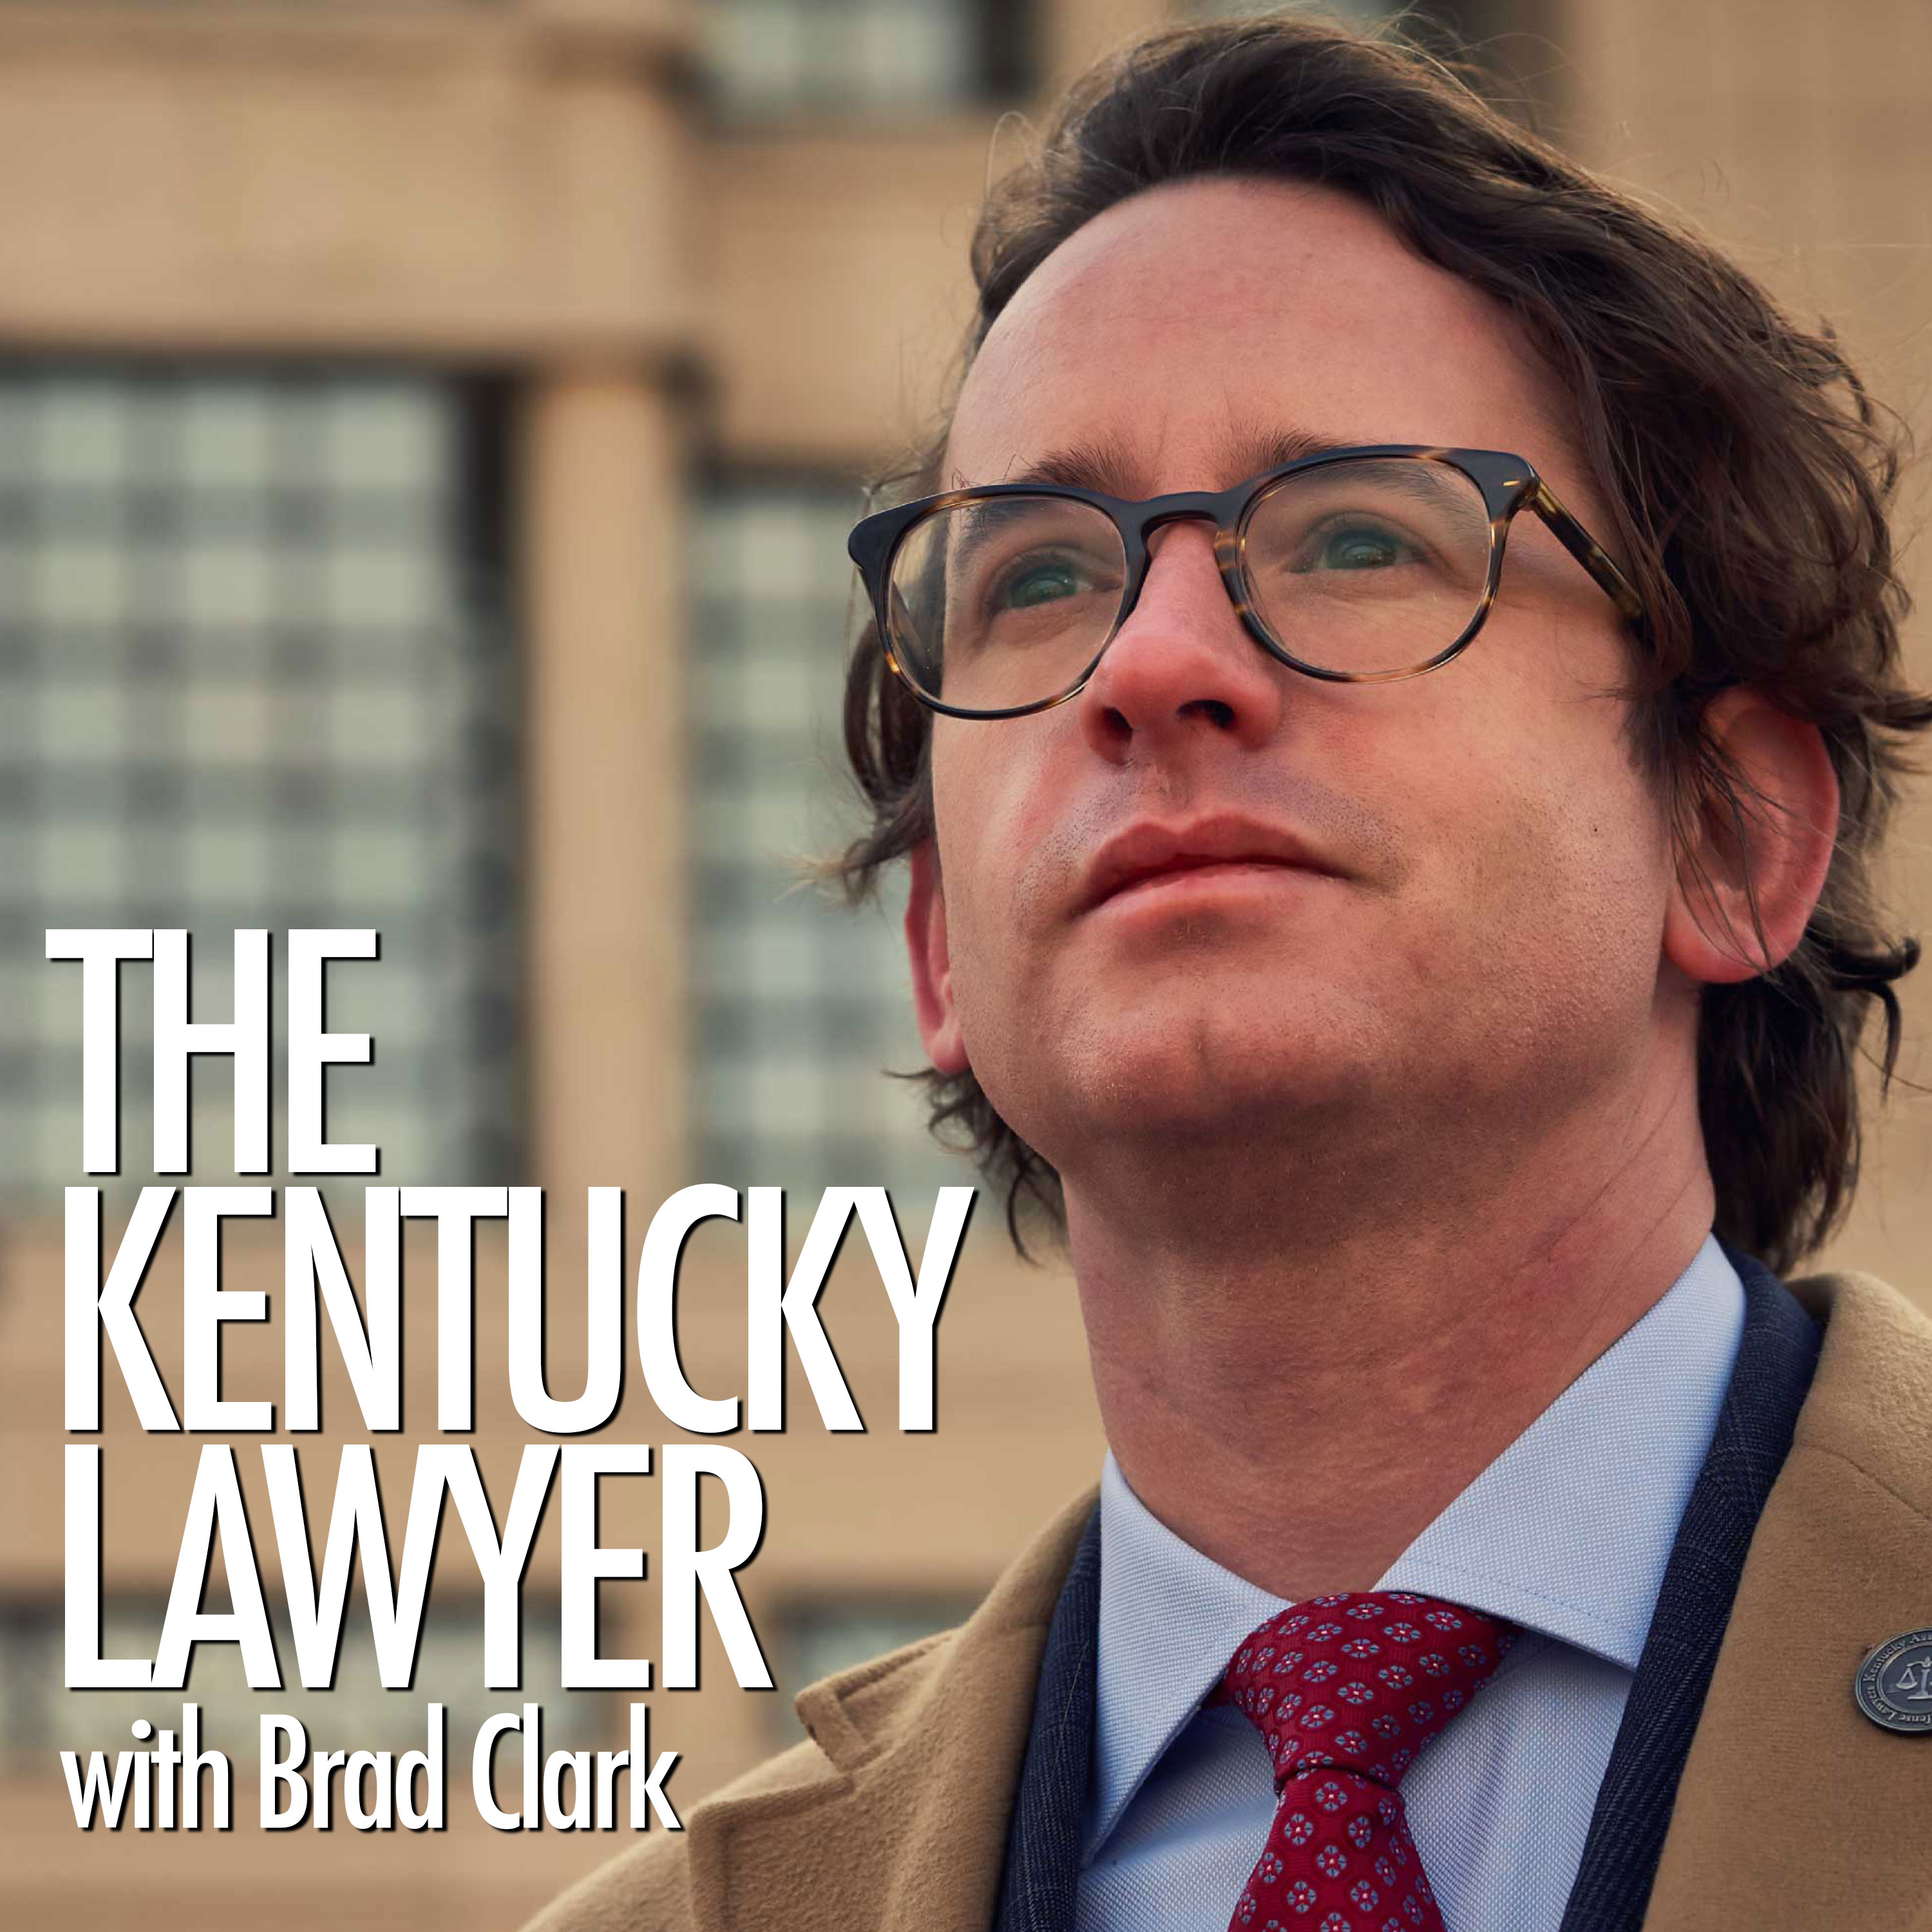 The Kentucky Lawyer